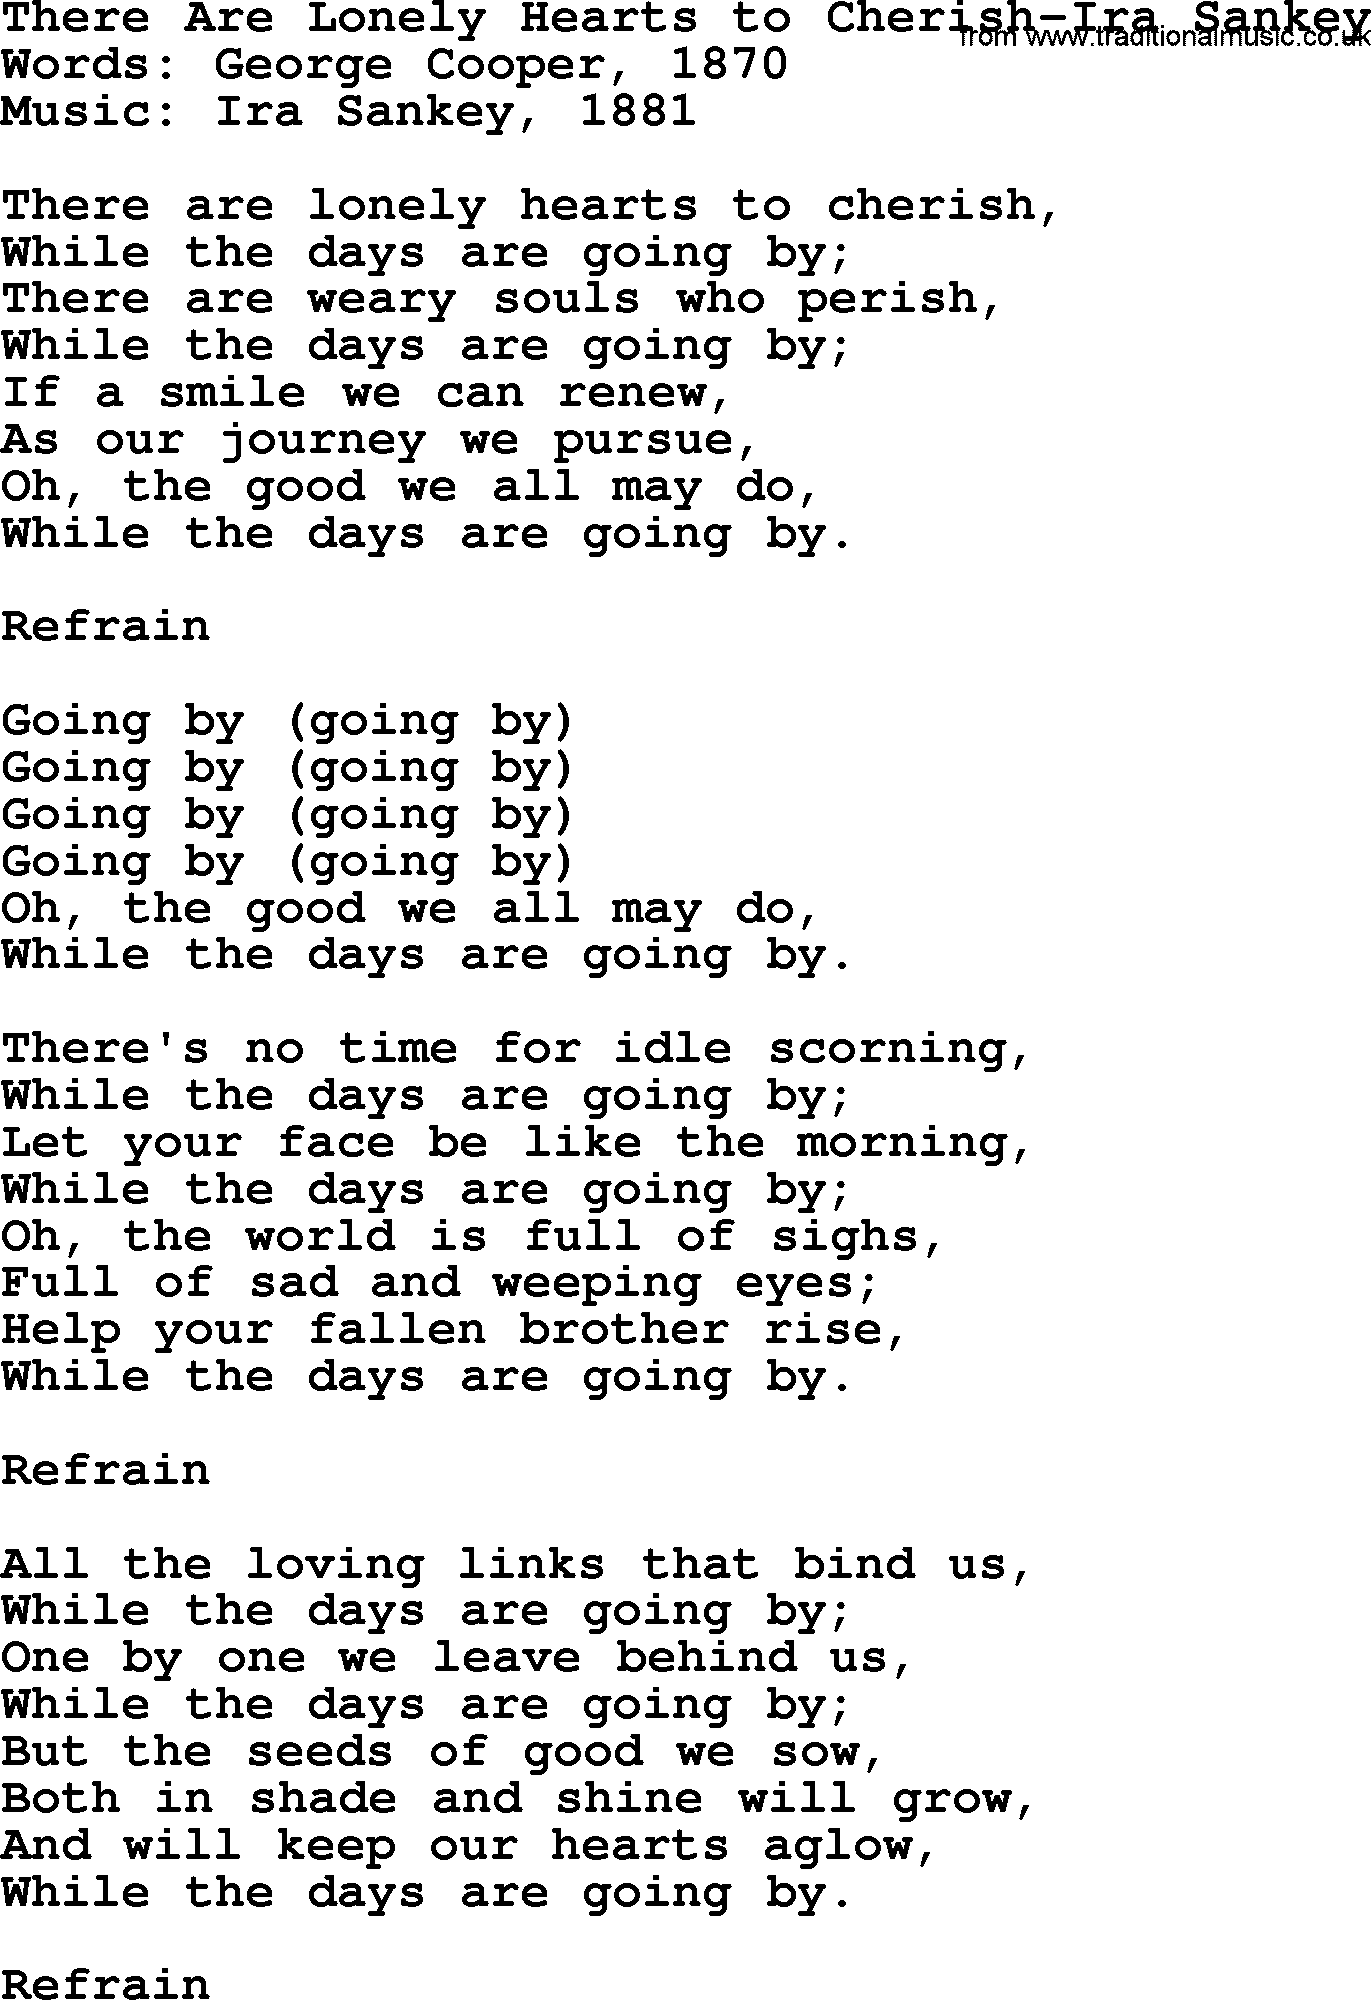 Ira Sankey hymn: There Are Lonely Hearts to Cherish-Ira Sankey, lyrics